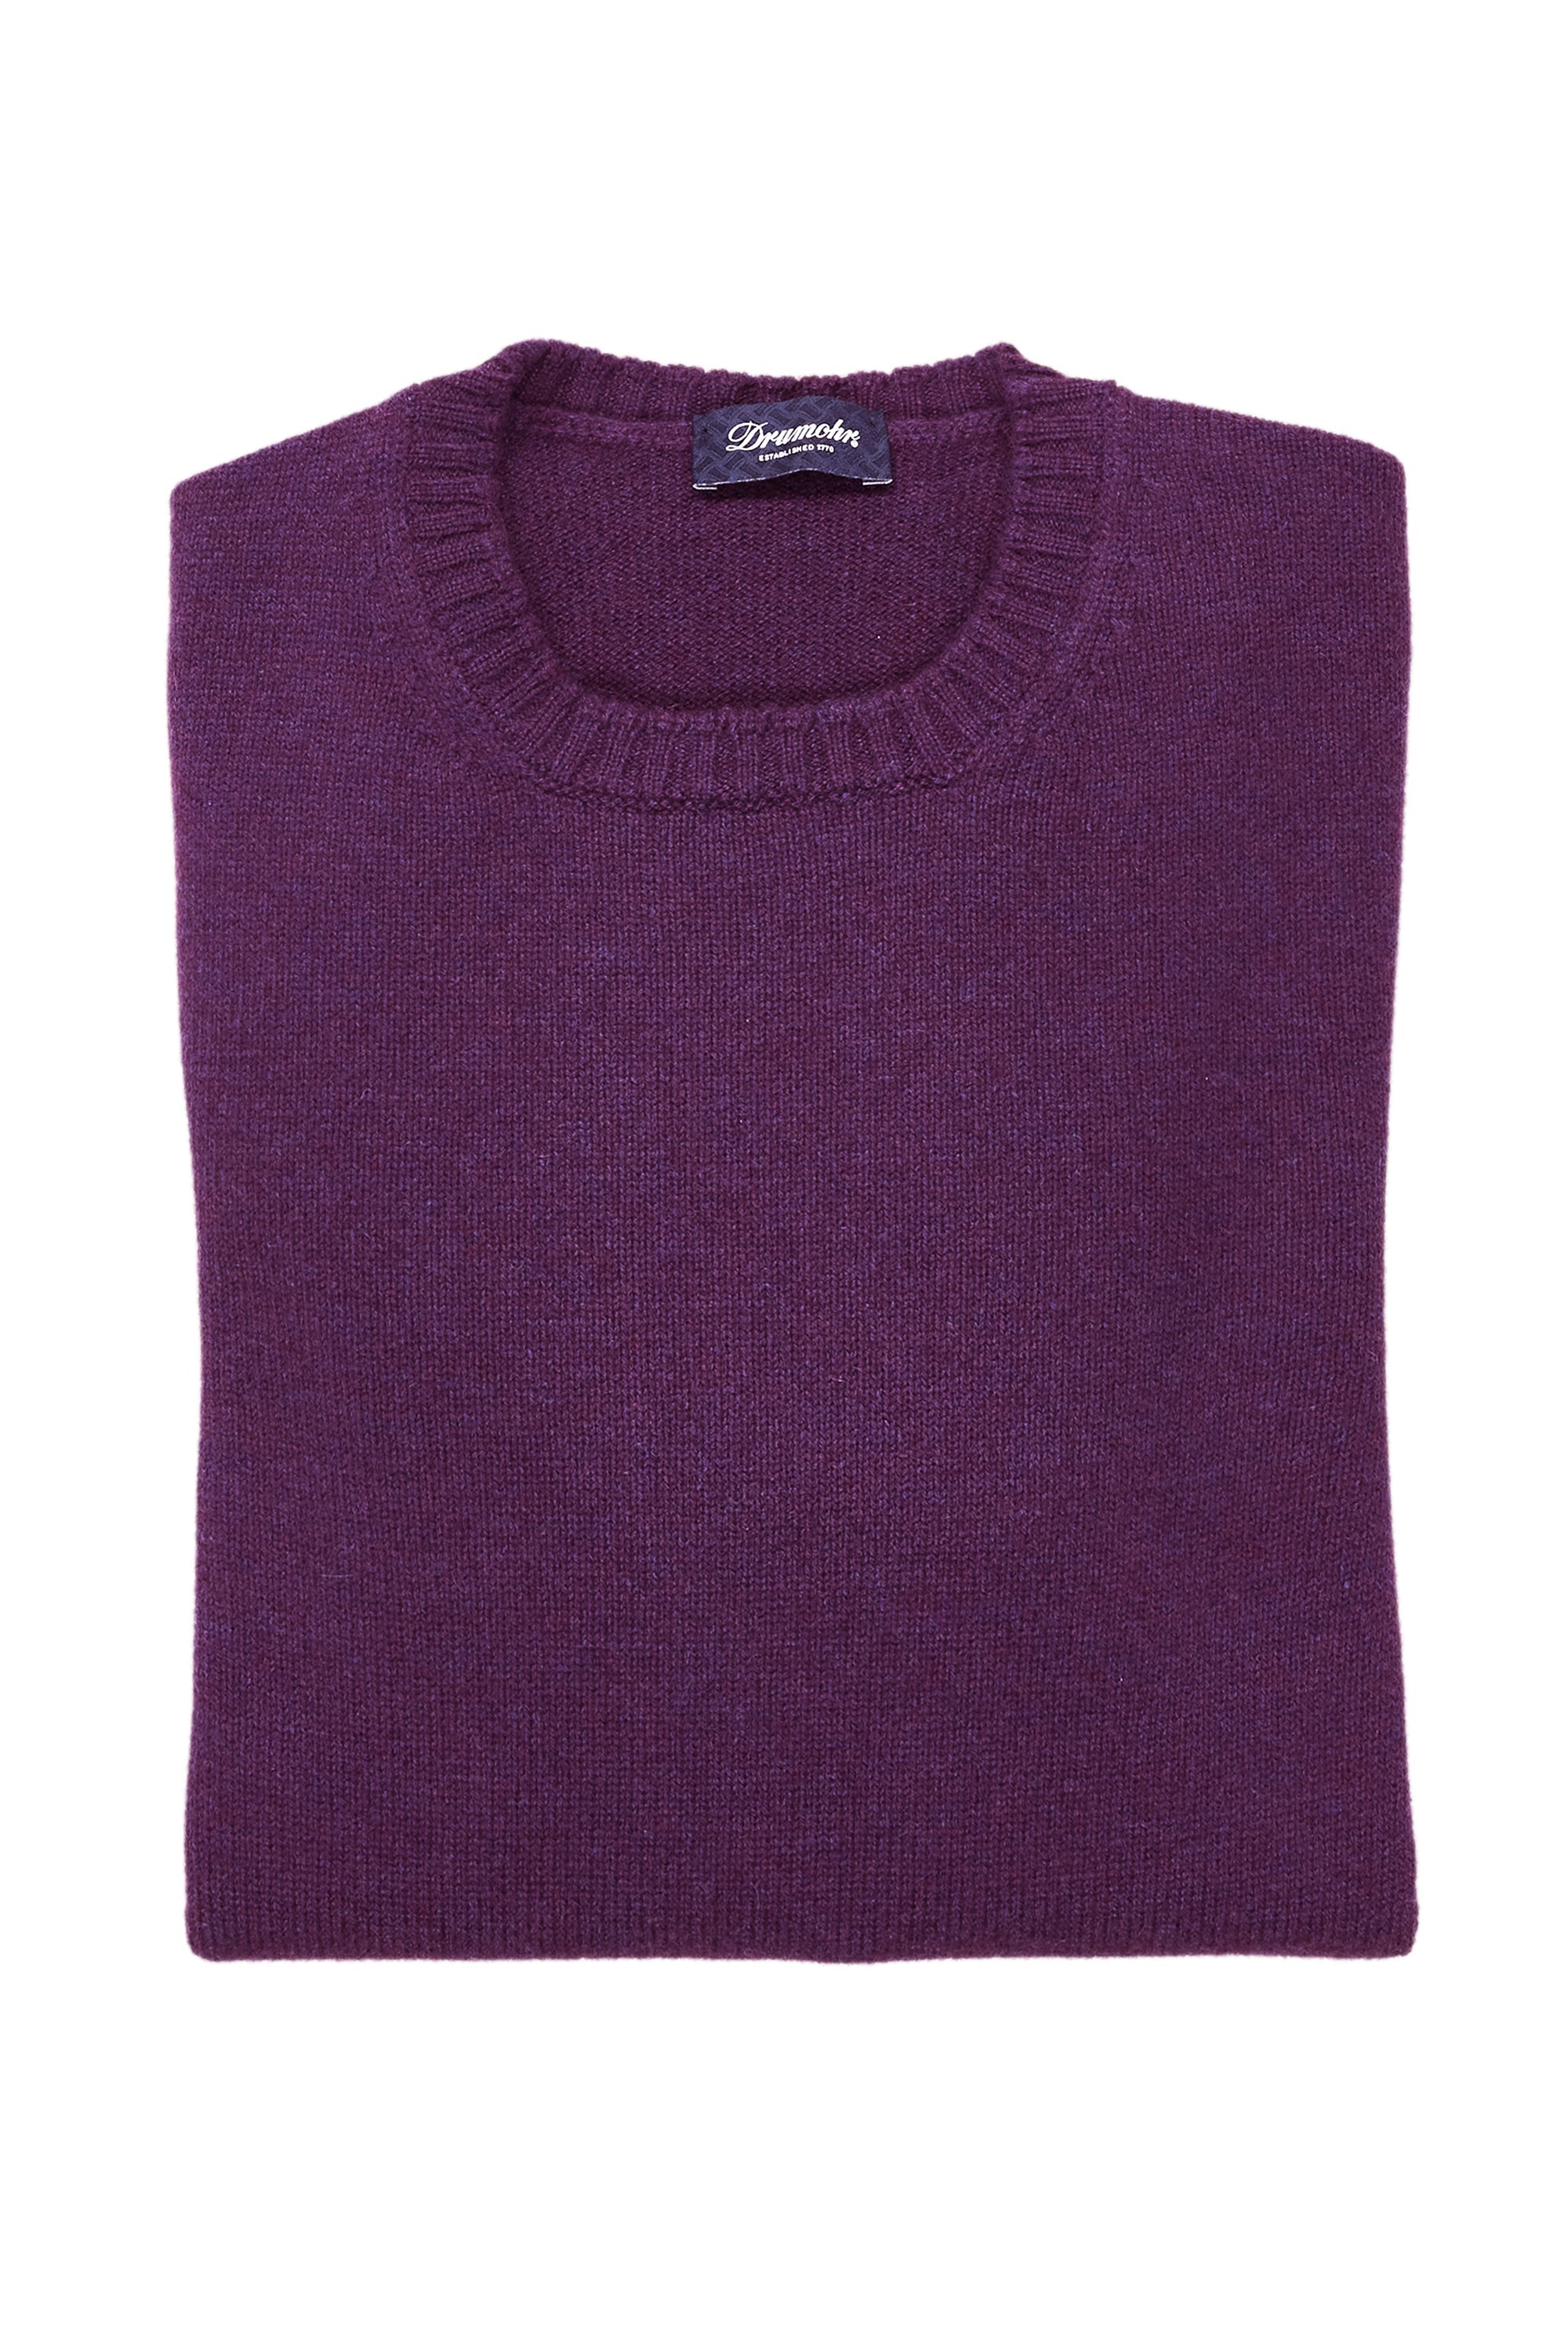 Drumohr Purple LS Solid Cashmere Crewneck Sweater